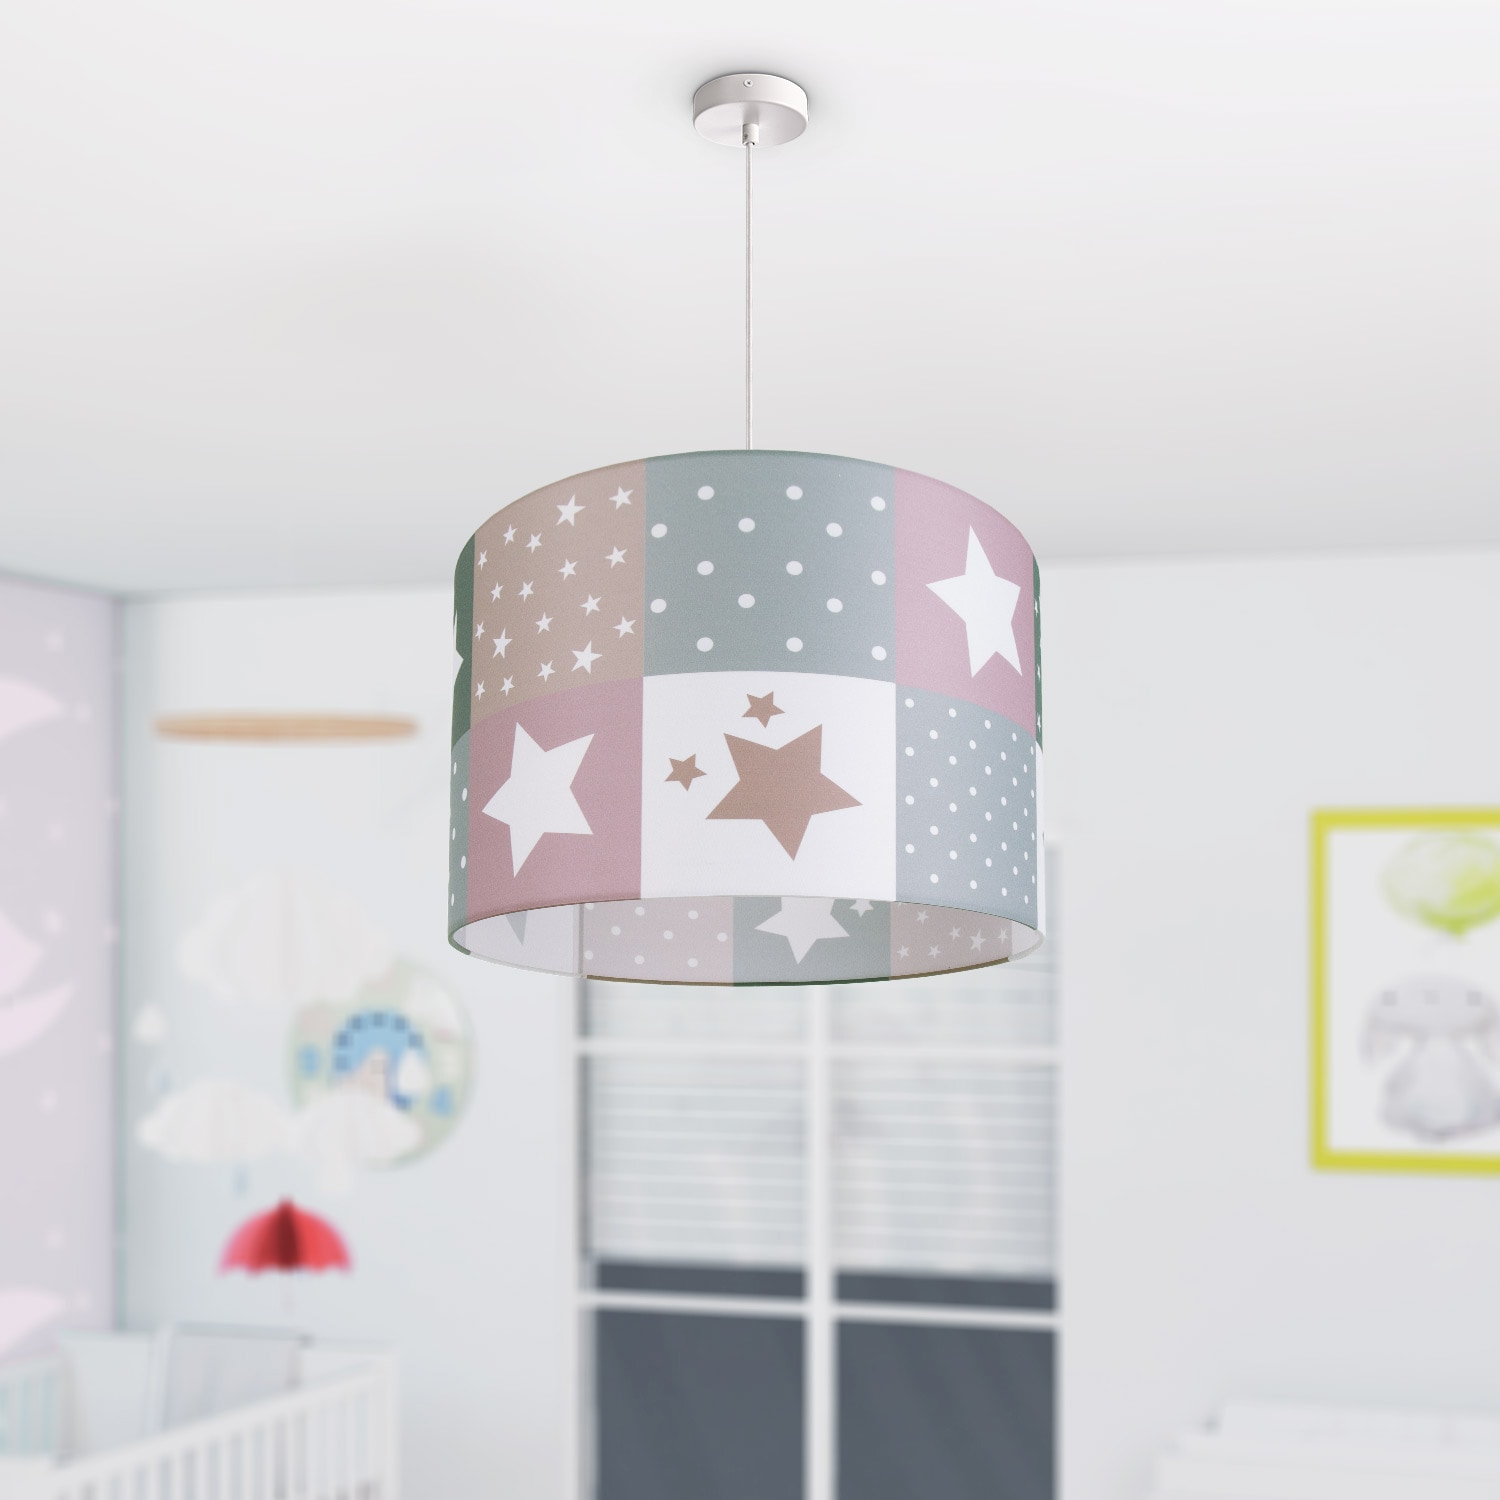 Home Lampe flammig-flammig, 1 Motiv bei Deckenlampe LED OTTO »Cosmo 345«, Kinderlampe Pendelleuchte Kinderzimmer Paco Sternen E27